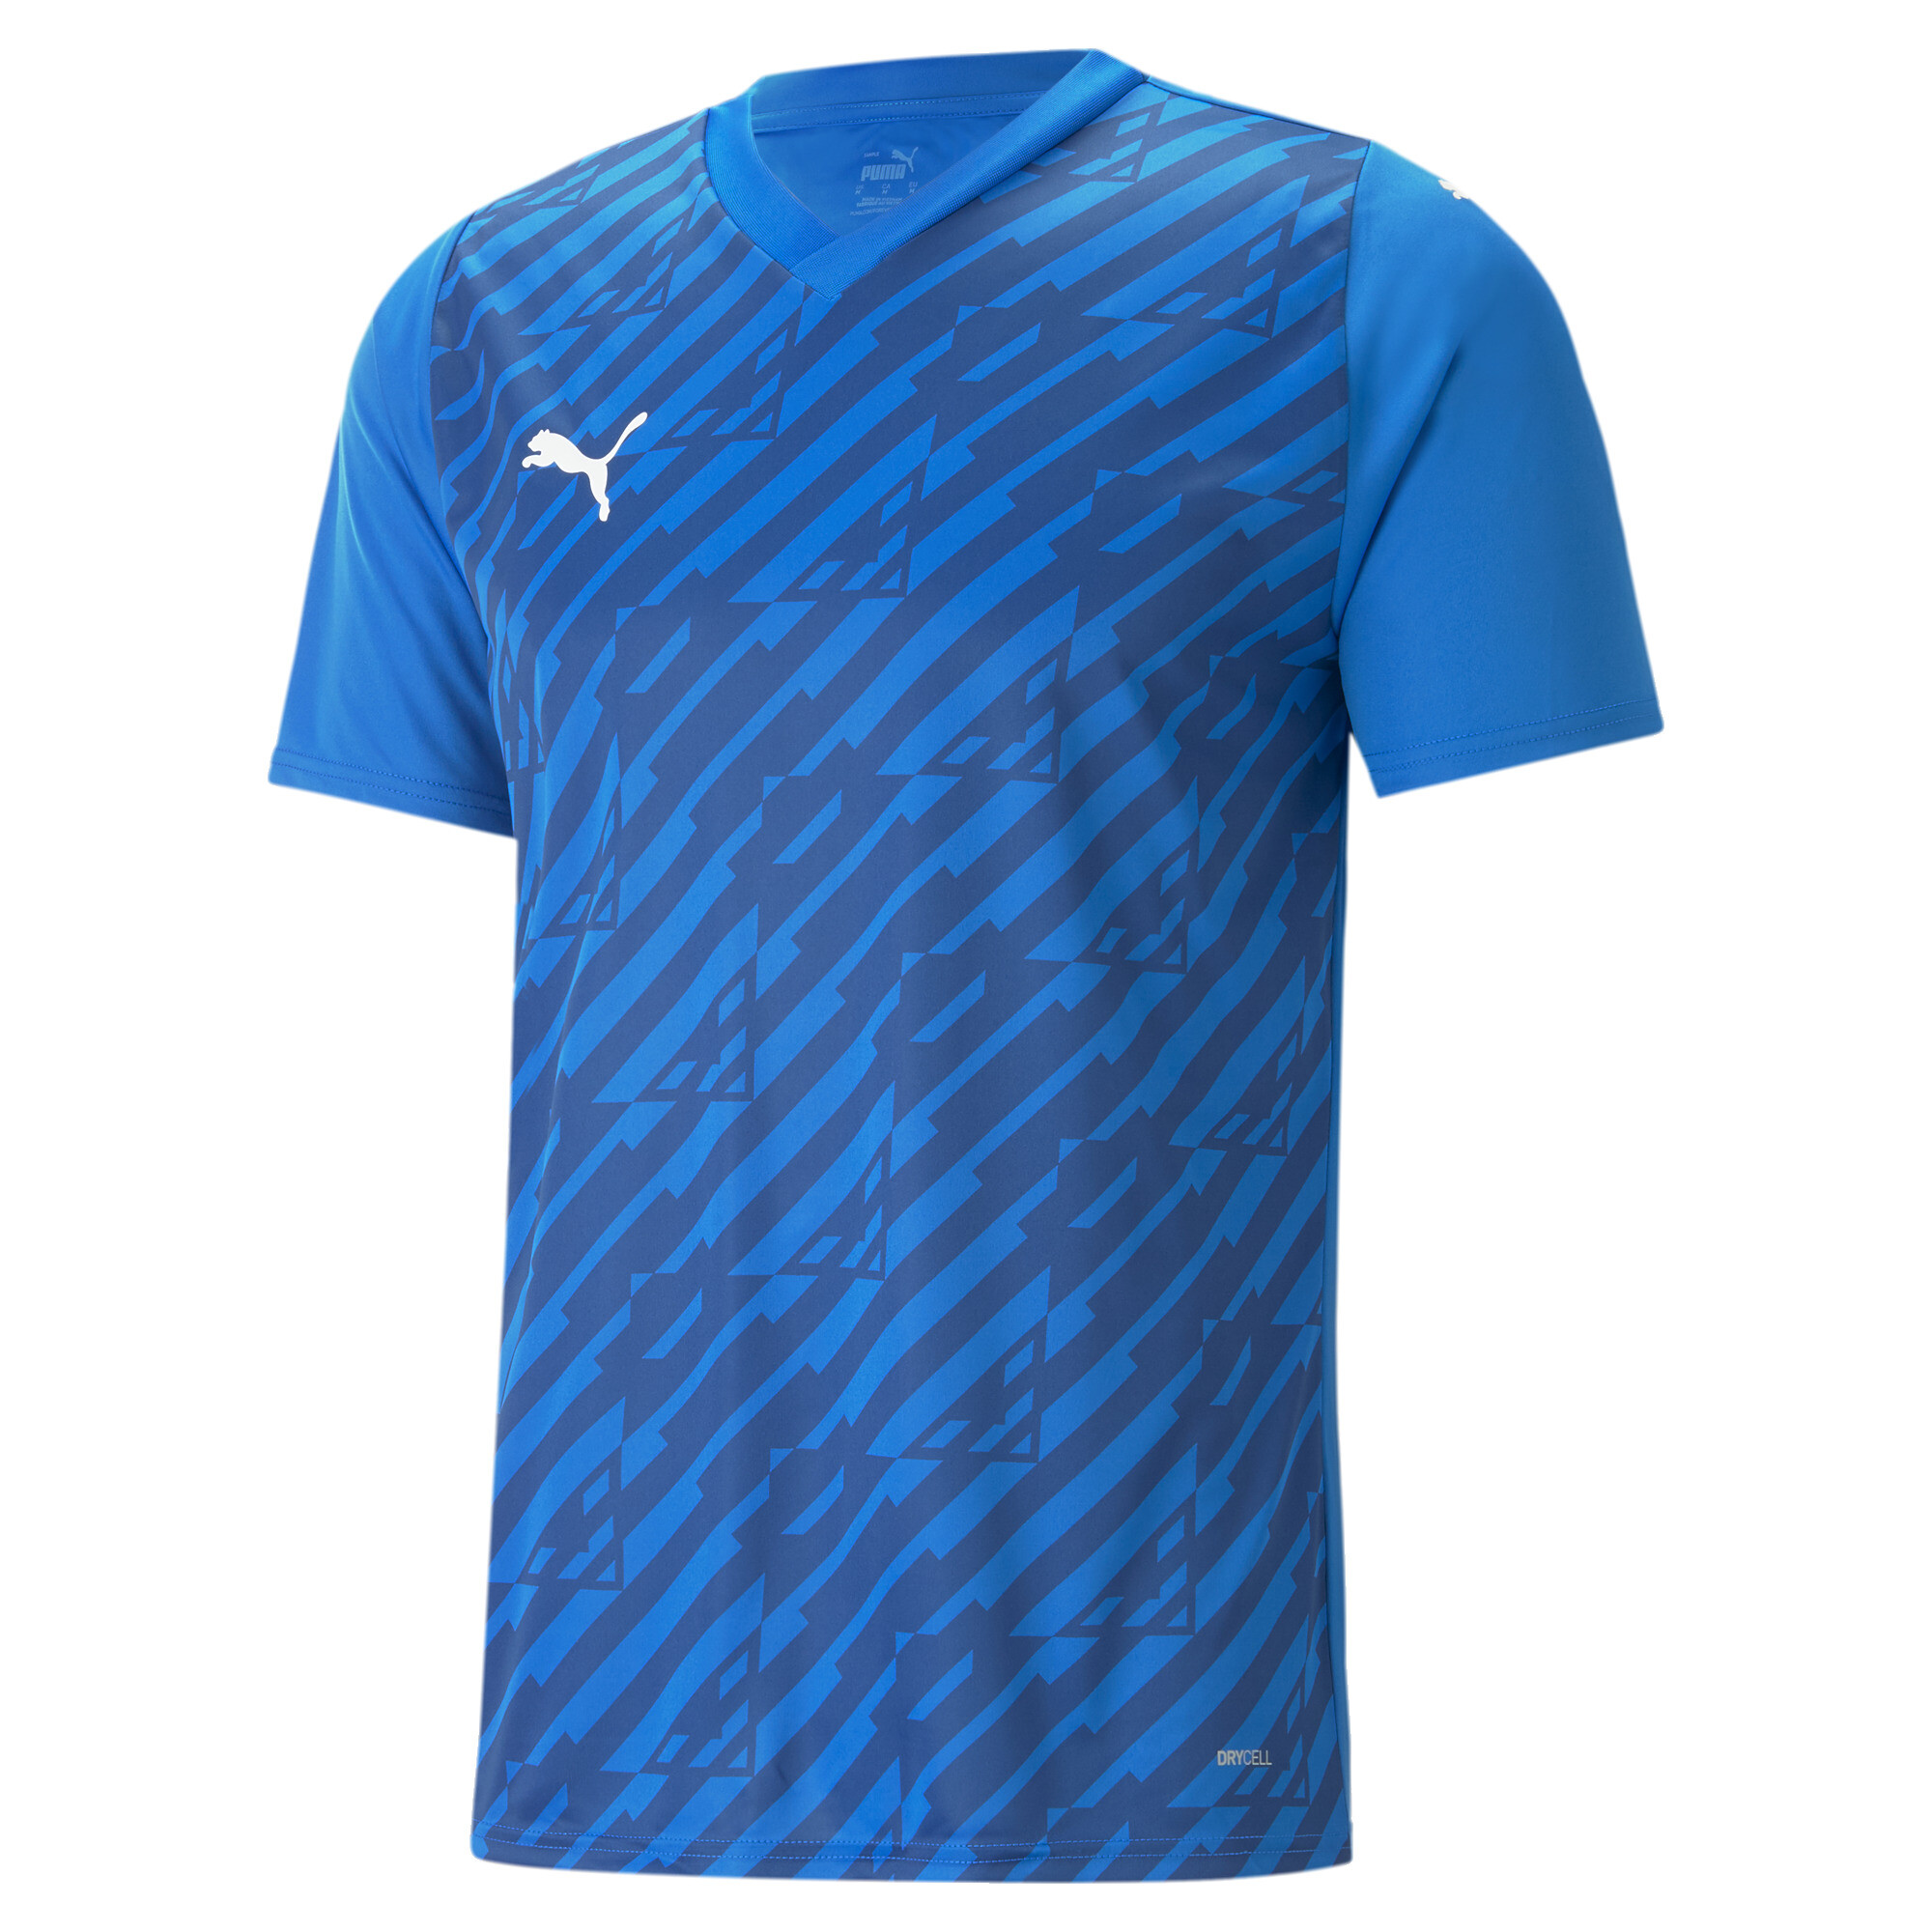 Men's Puma Team ULTIMATE Football Jersey, Blue, Size S, Sport